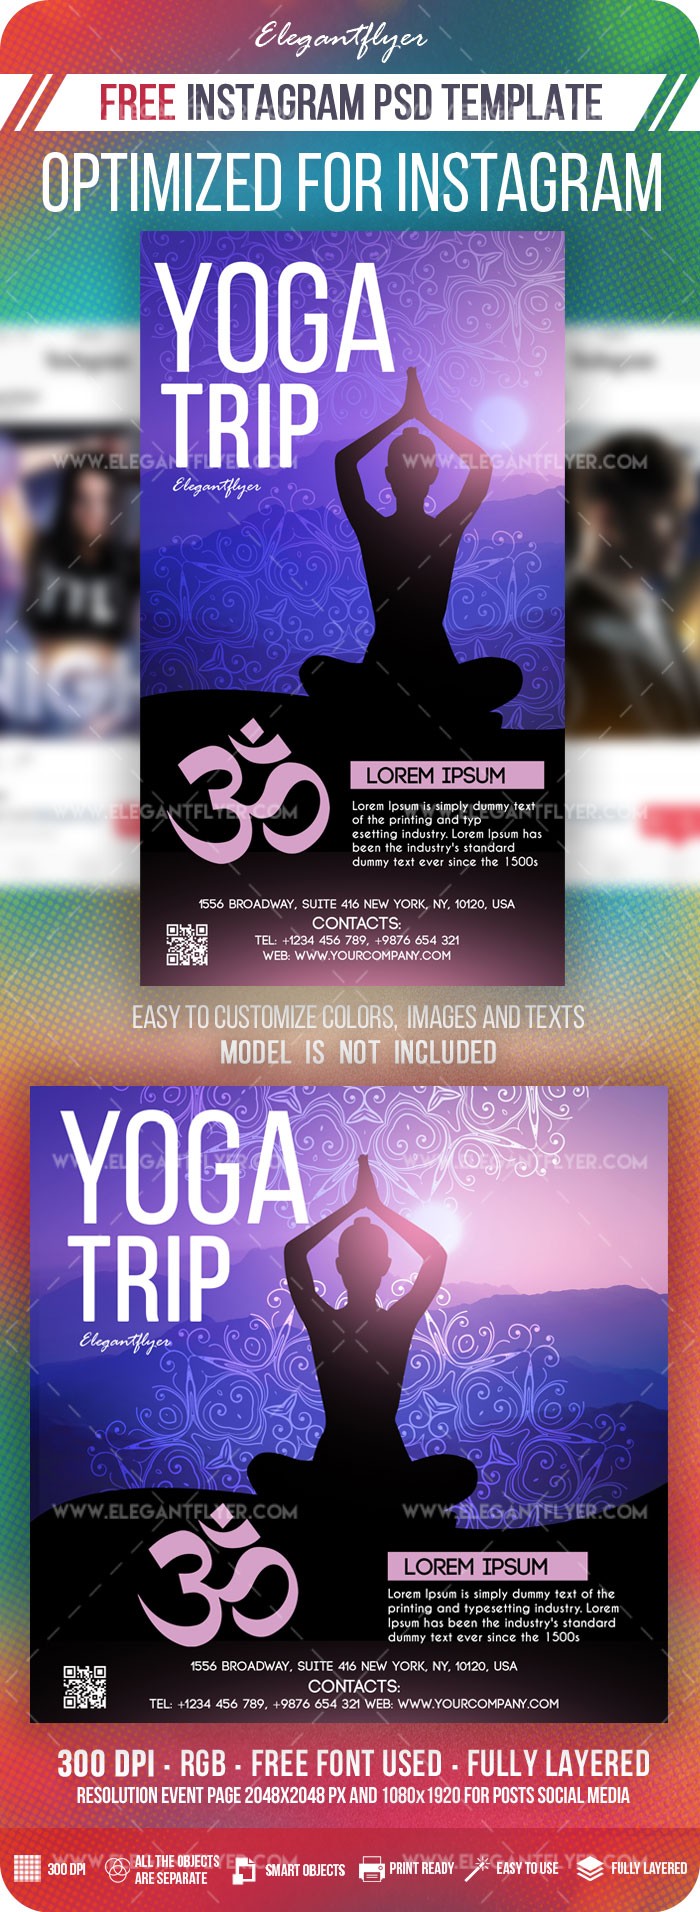 Yoga Trip Instagram by ElegantFlyer